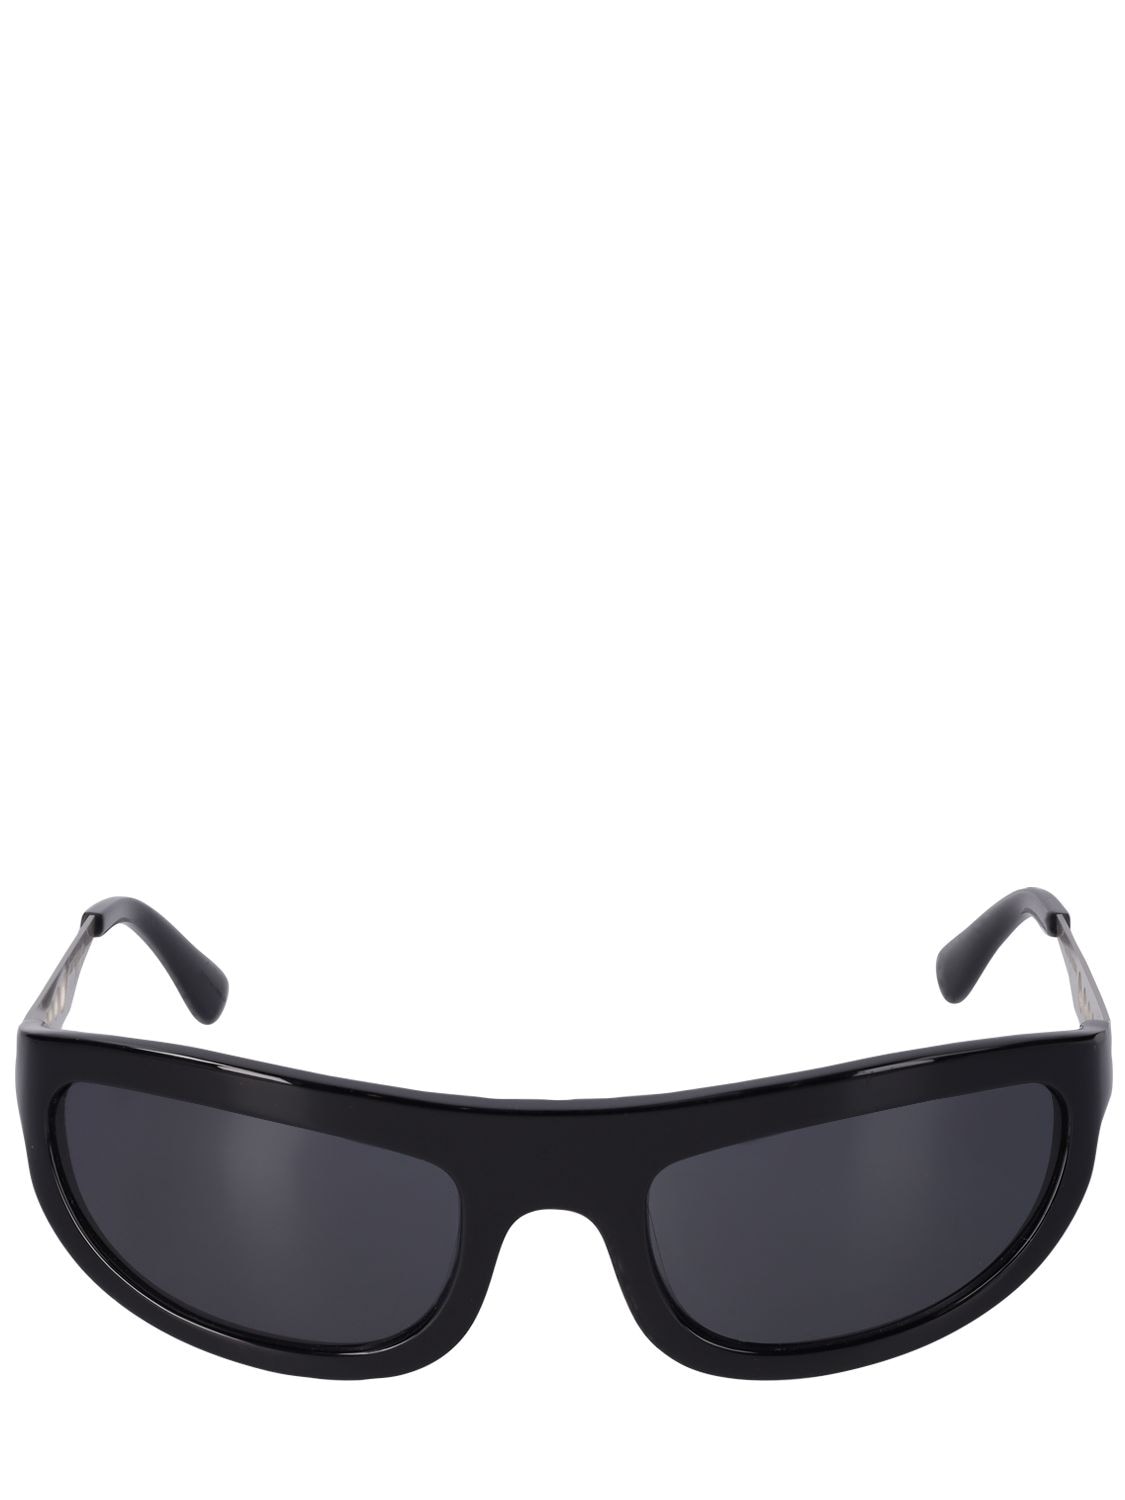 Corten Black Steel Sunglasses – WOMEN > ACCESSORIES > SUNGLASSES